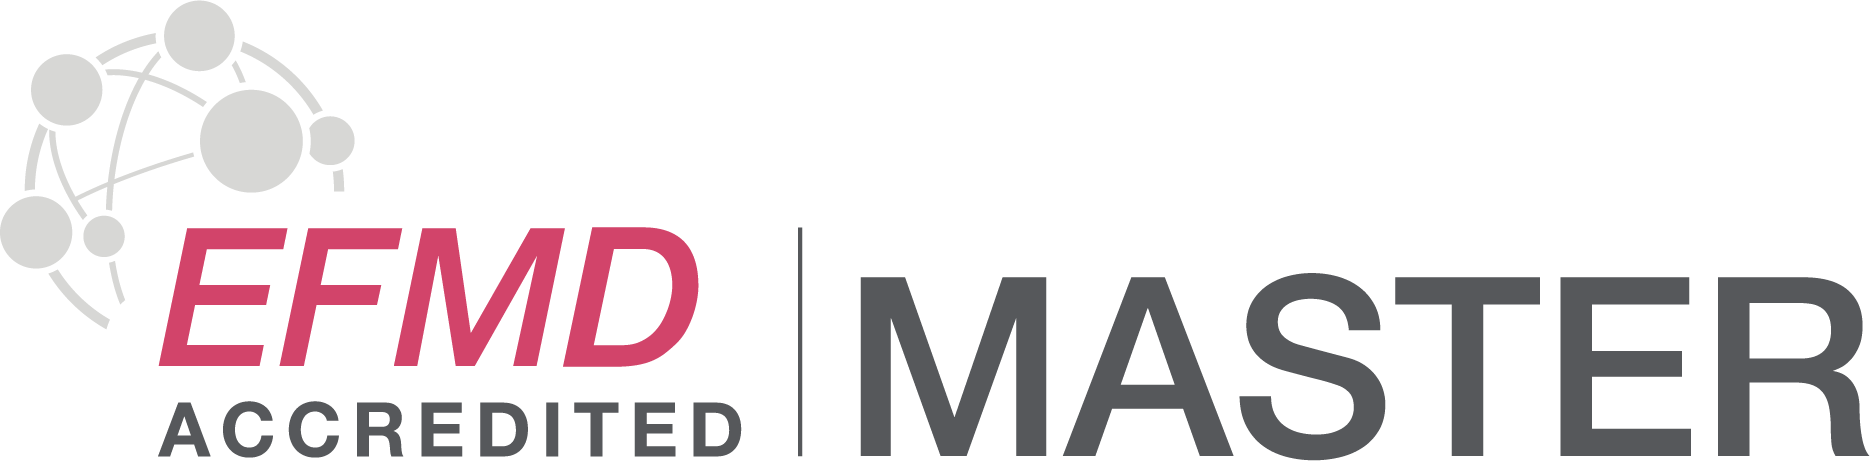 EFMD accredited